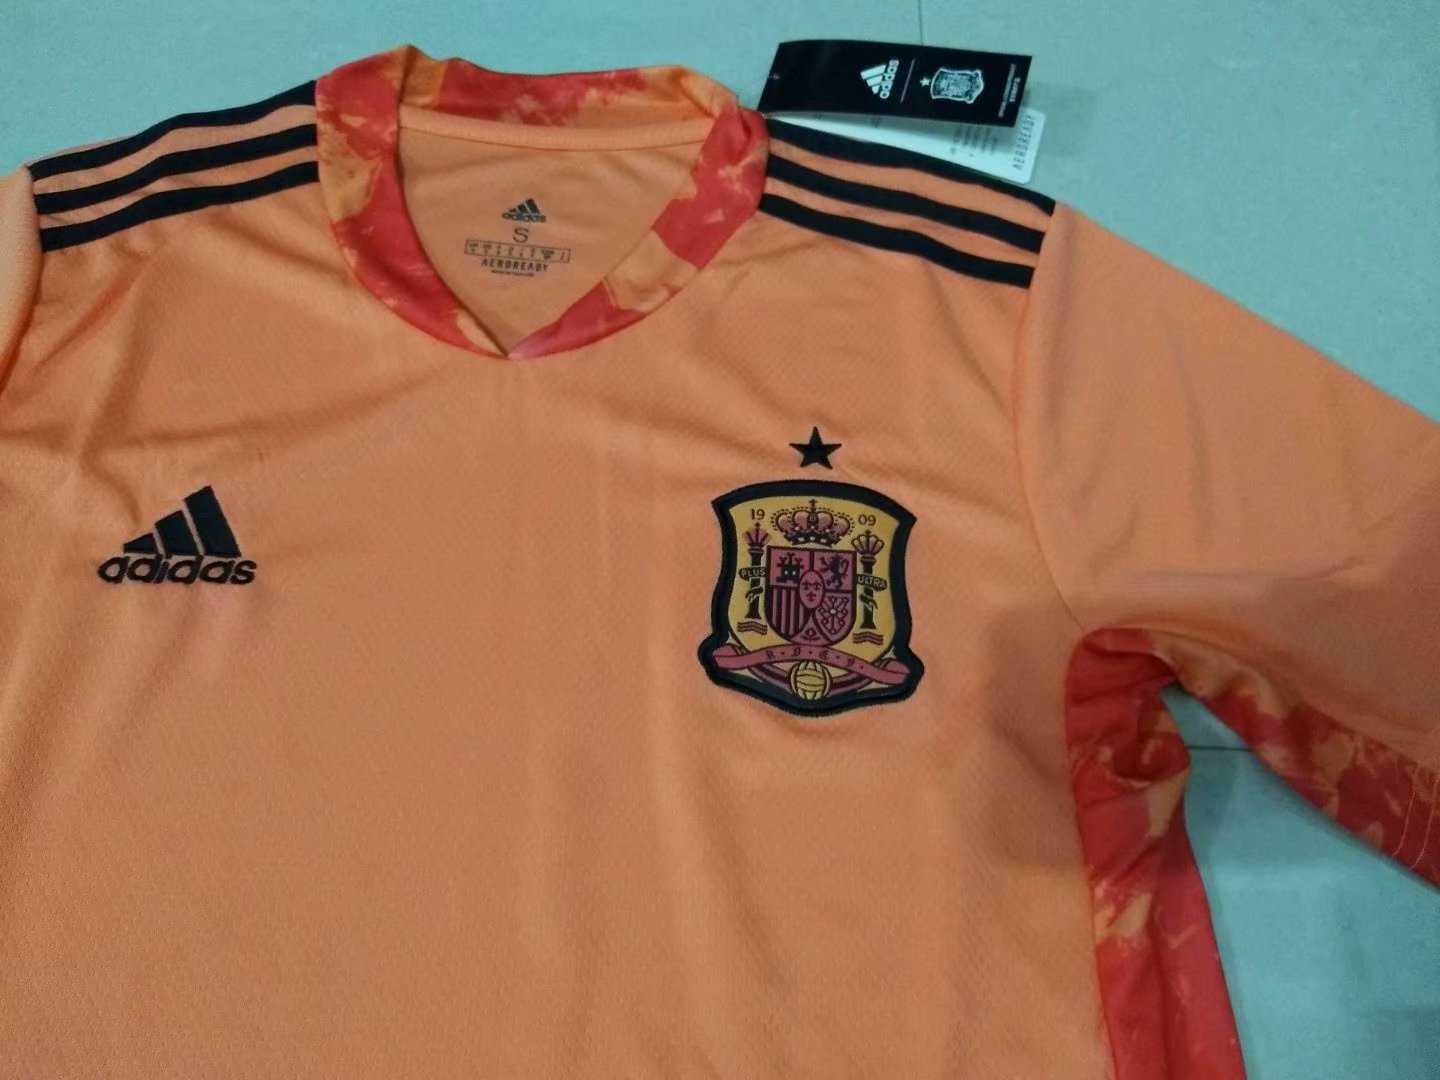 2020 Spain National Team Goalkeeper Pink Mens Soccer Jersey Replica 